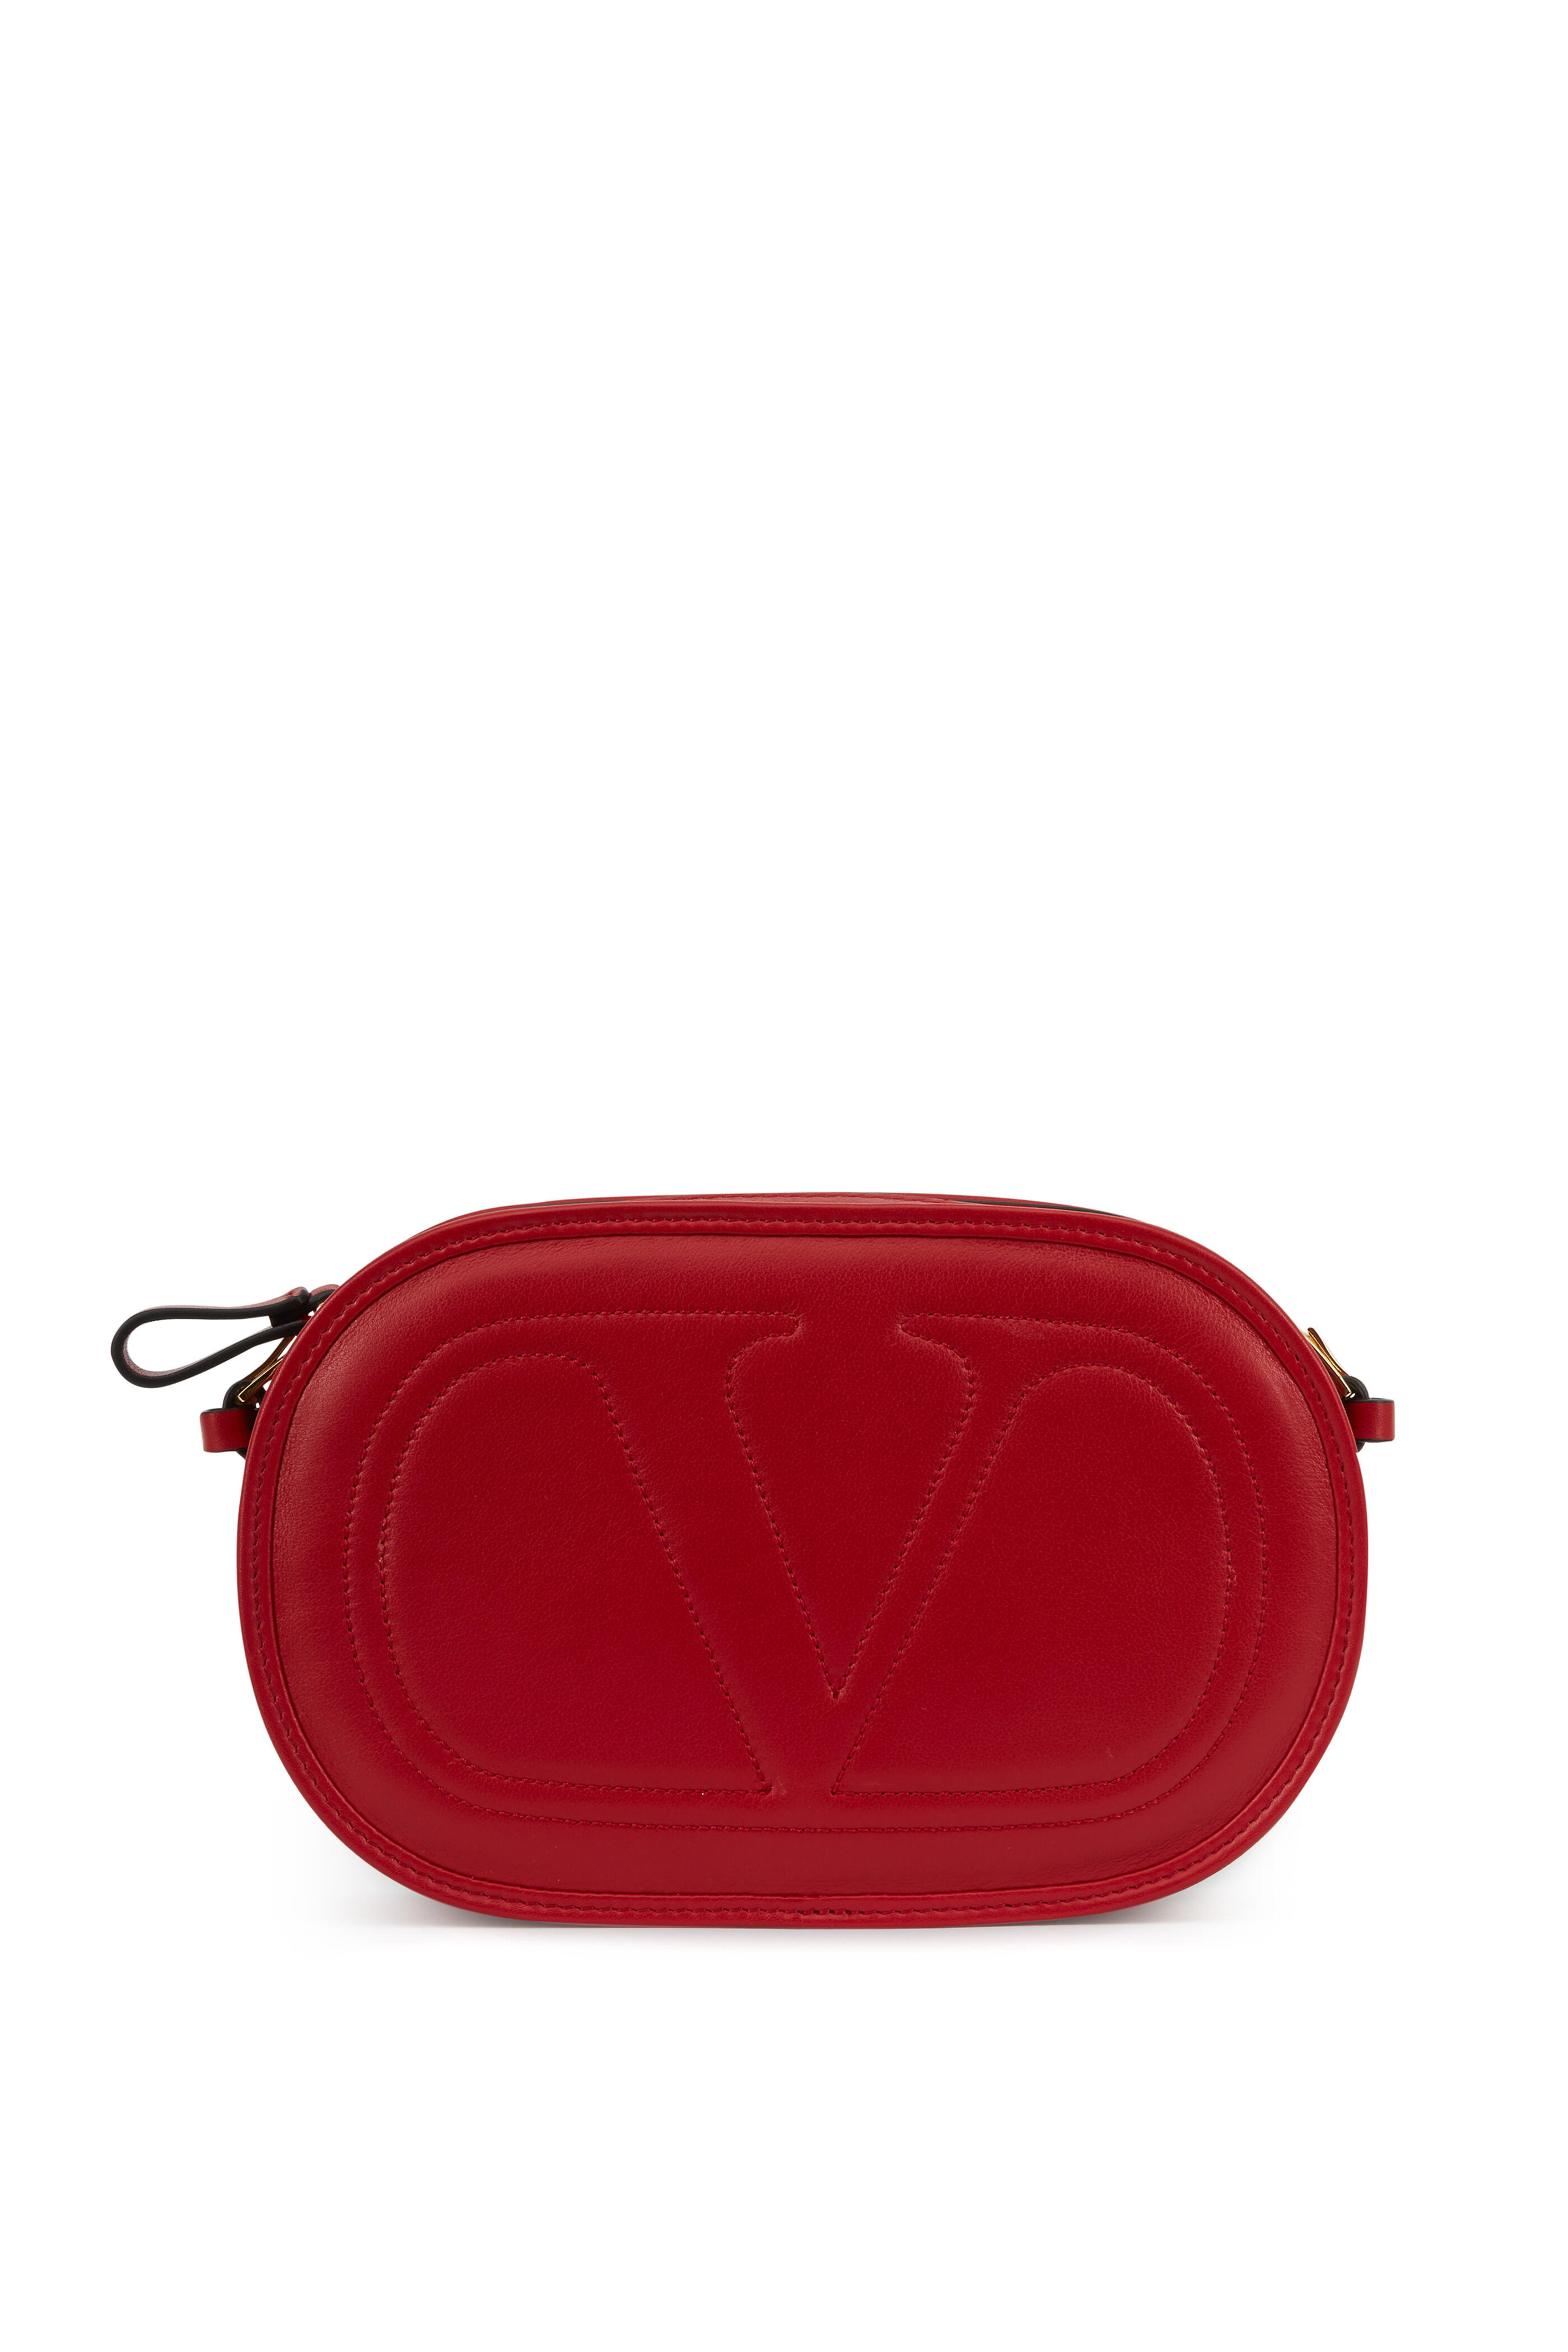 Valentino Red Leather Logo Go Crossbody Bag Valentino